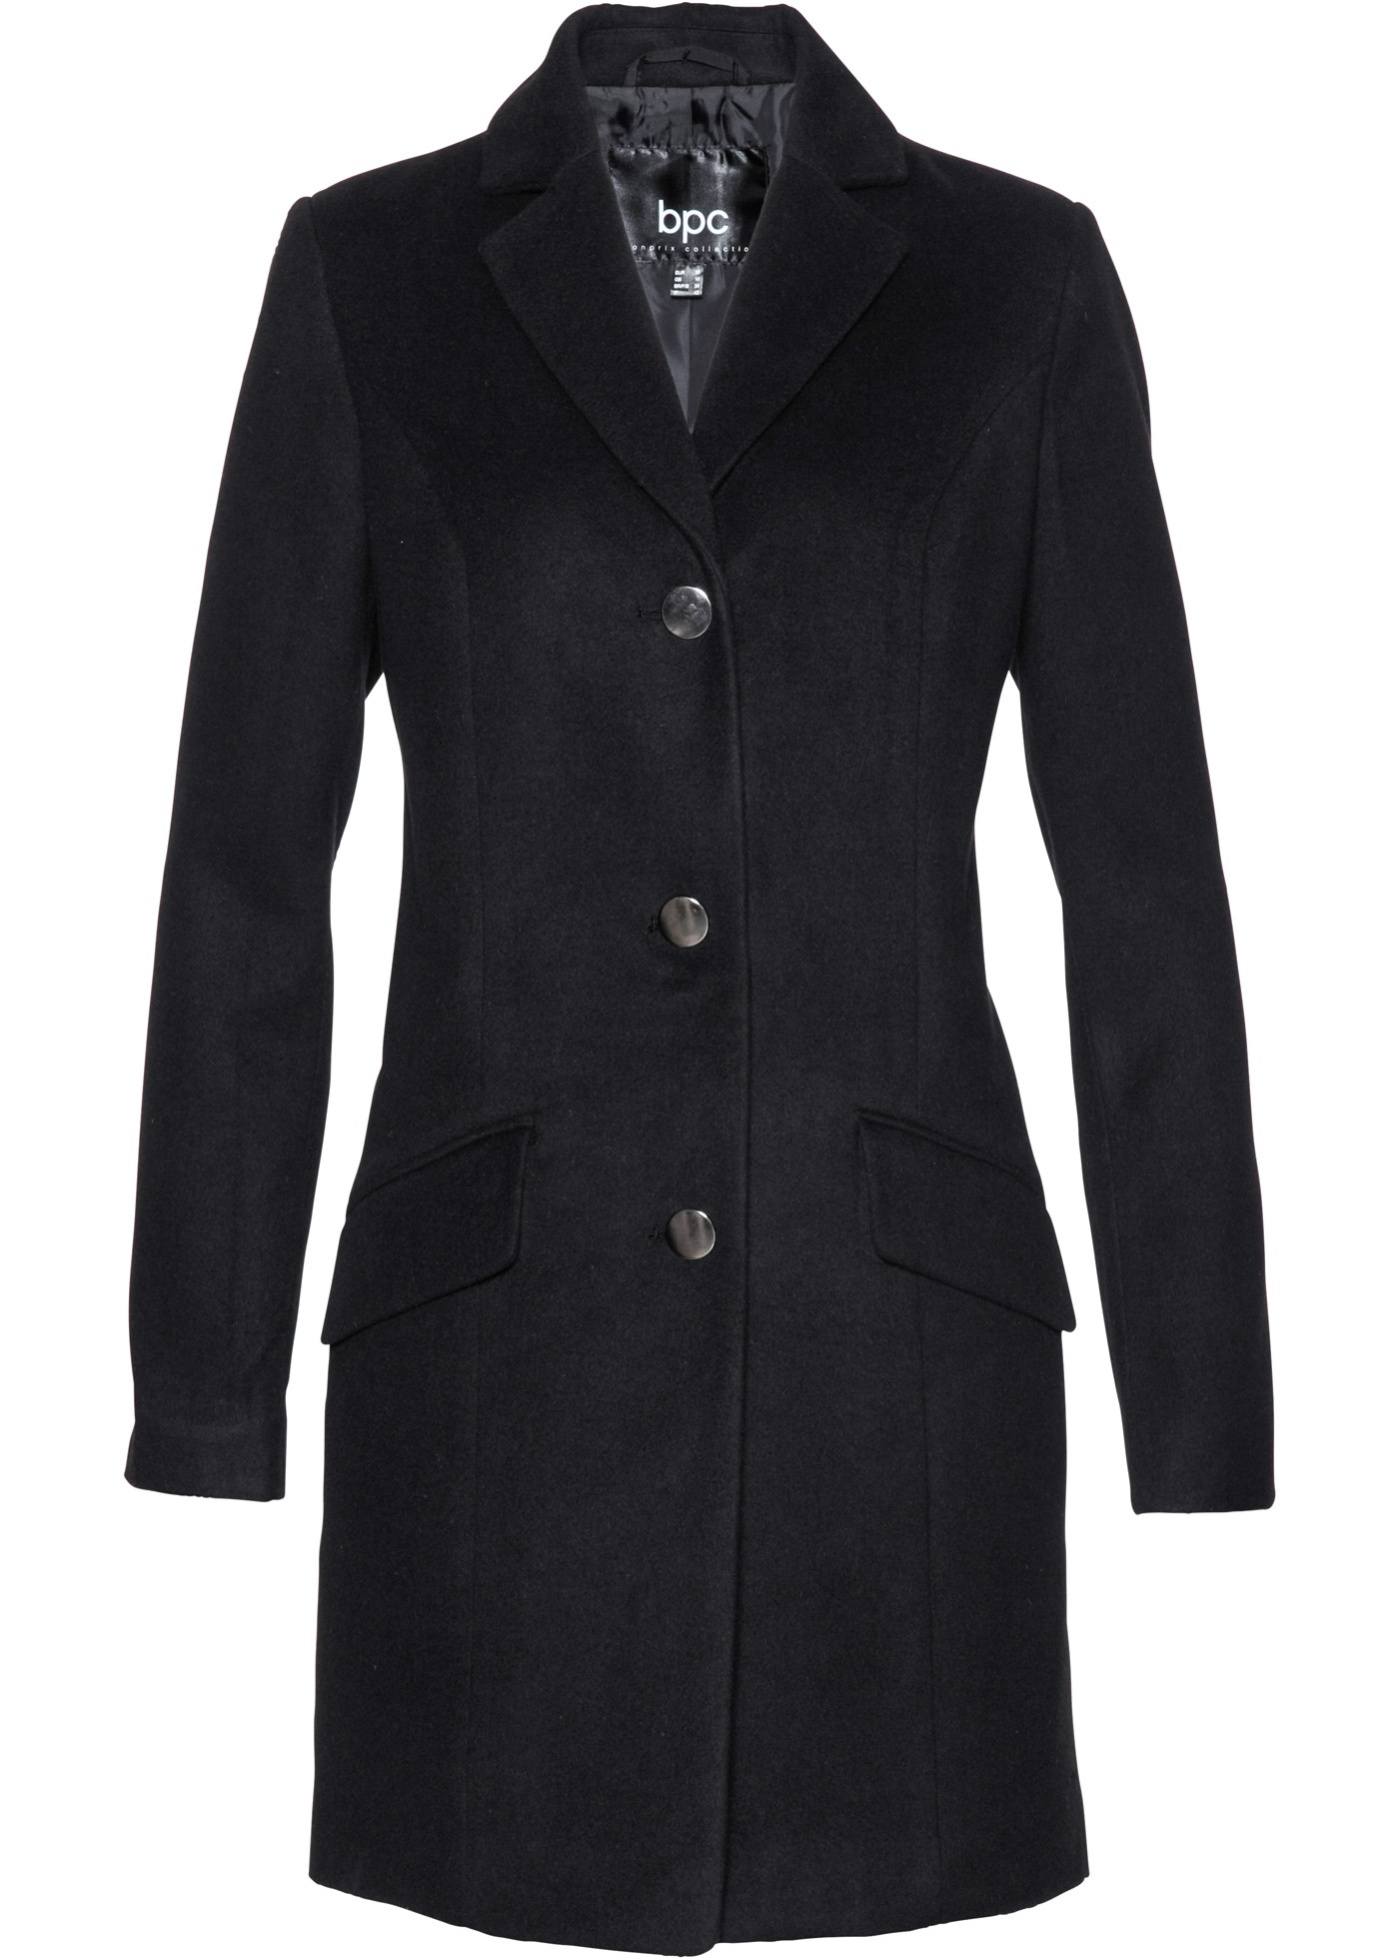 manteau style blazer